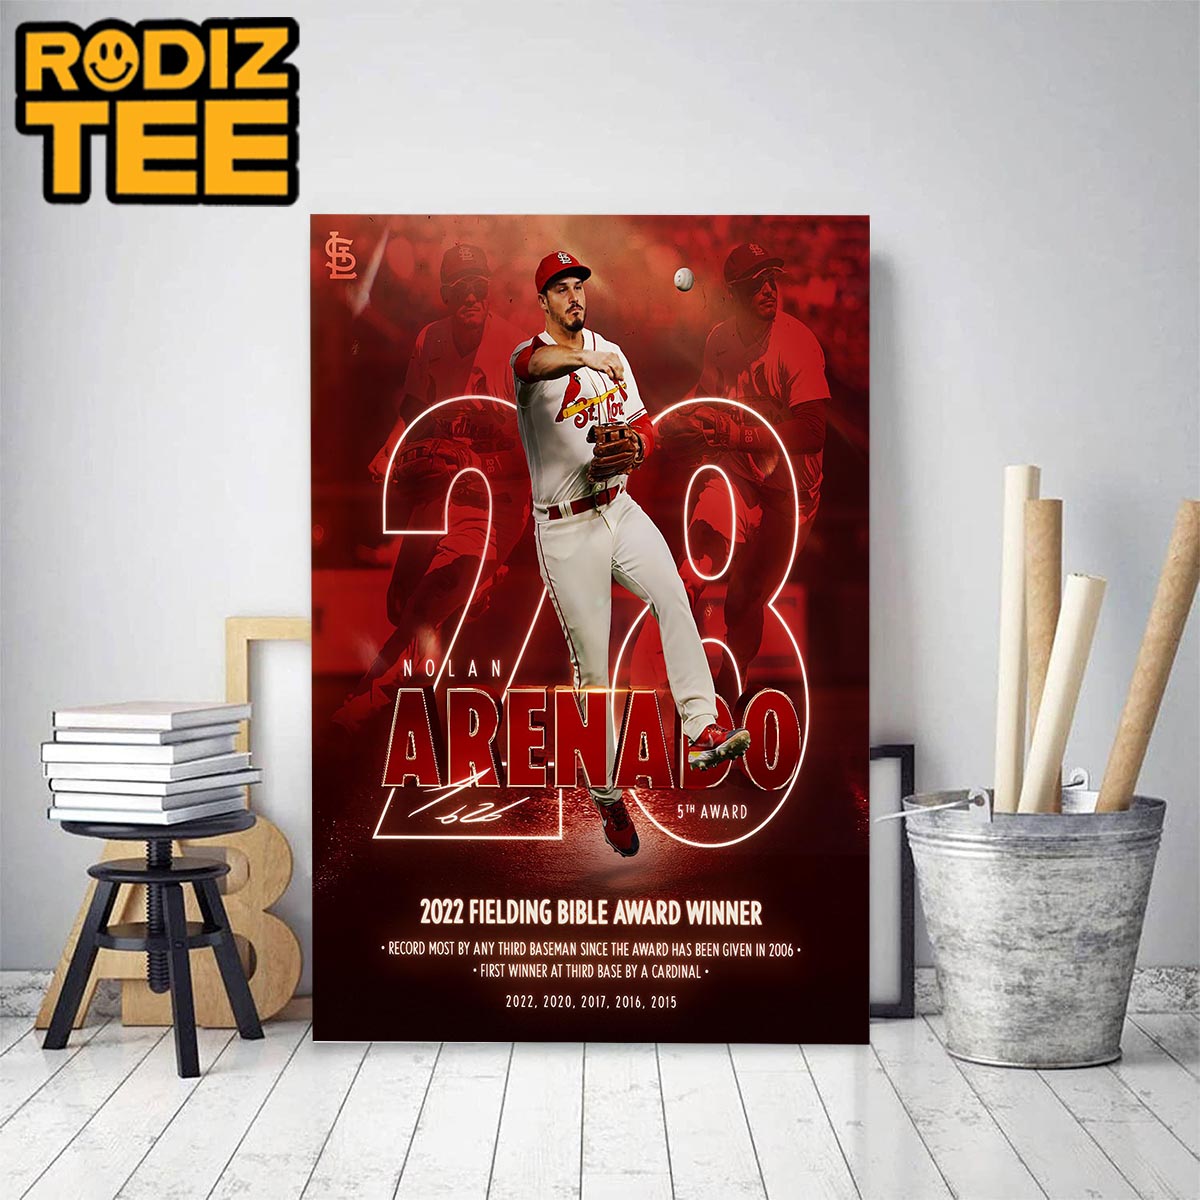 The St Louis Cardinals Nolan Arenado 2022 Fielding Bible Award Winner Classic Decoration Poster Canvas